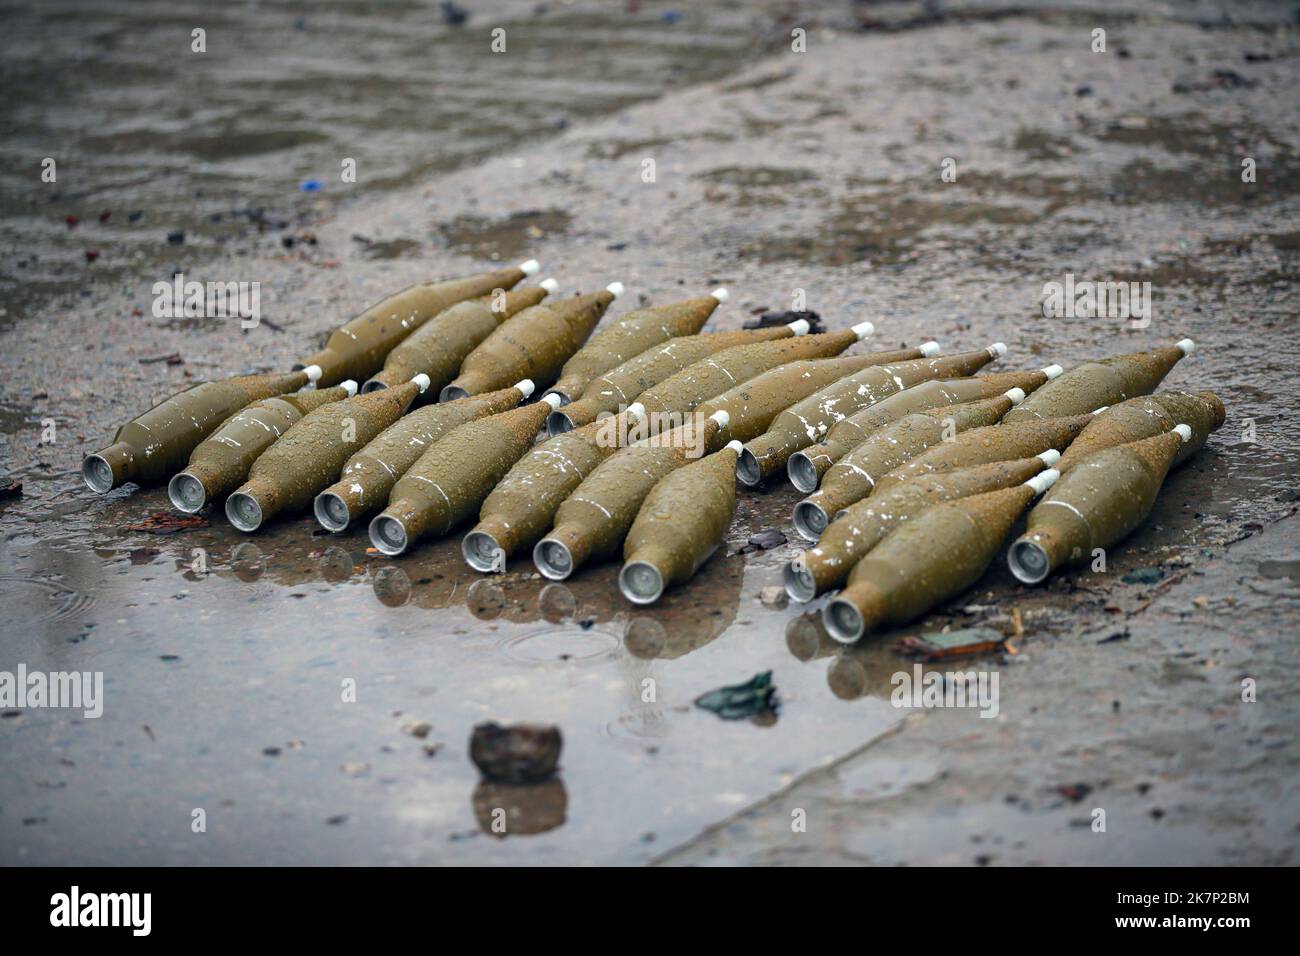 KHARKIV REGION, UKRAINE - OCTOBER 09, 2022 - Shells found on the premises of an ammunition depot abandoned by the russian occupiers, Kharkiv Region, northeastern Ukraine. Stock Photo